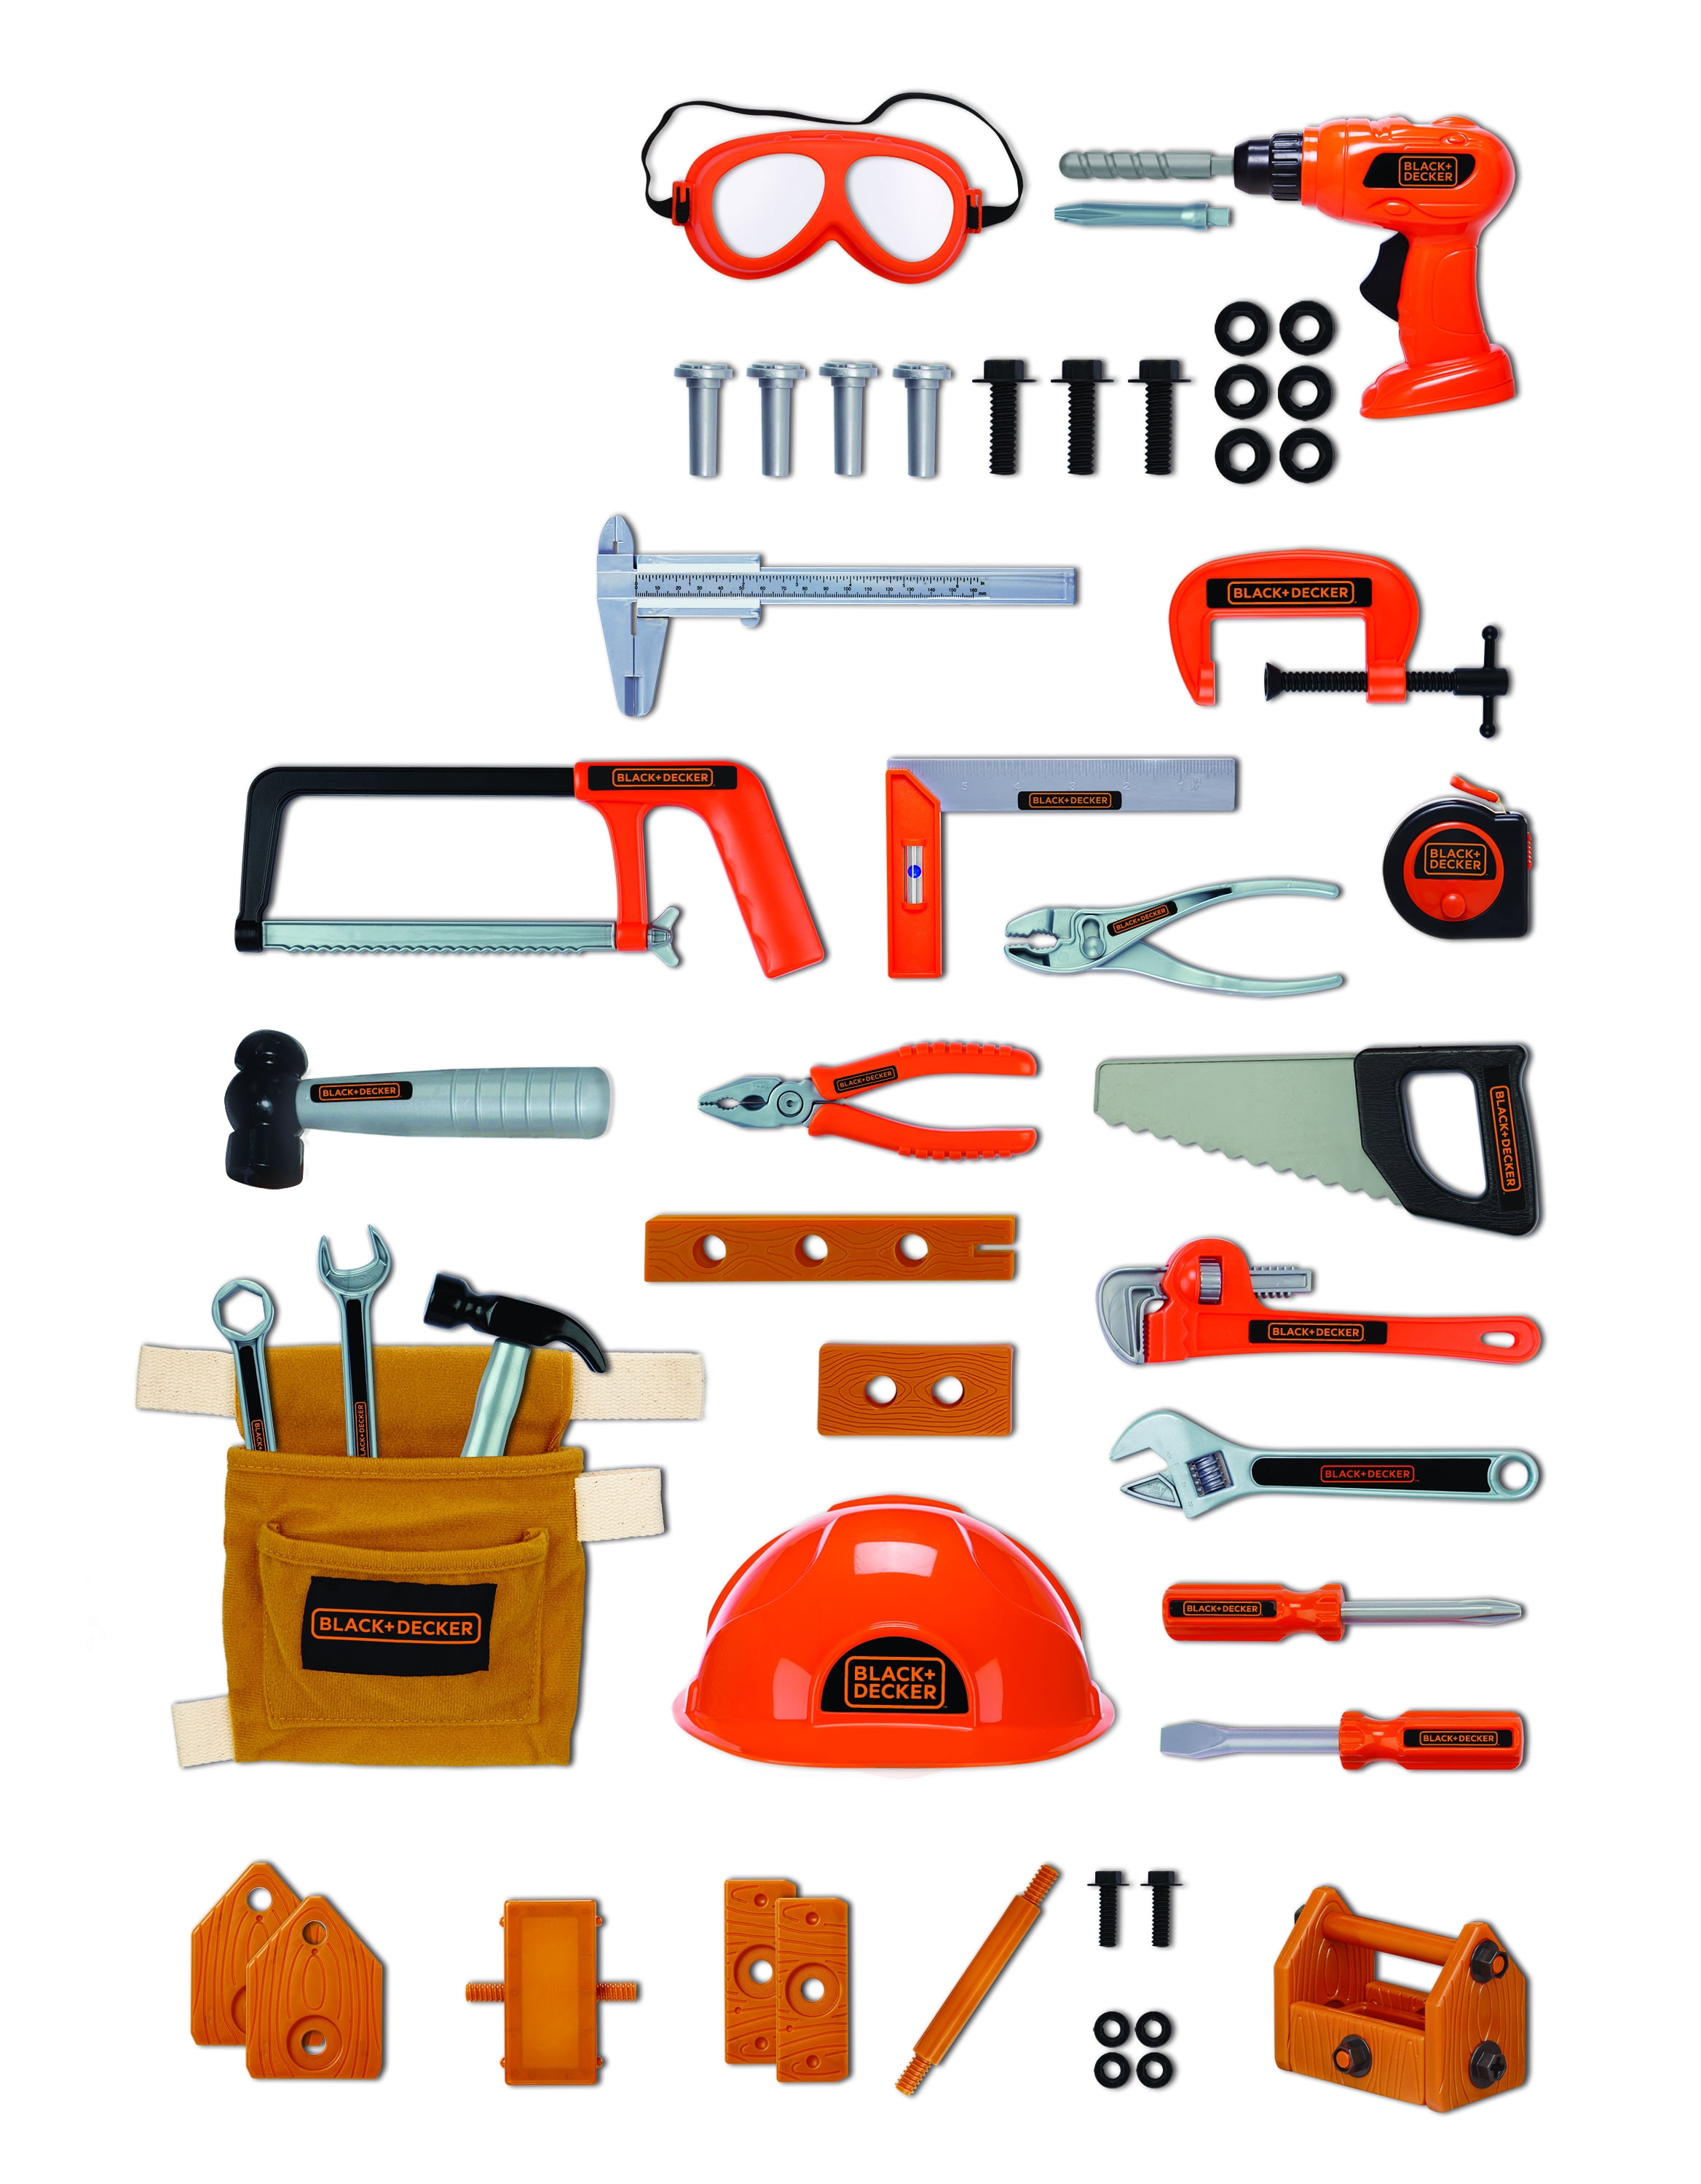 Black & Decker Junior Carpenter Tool Set with 50 tools and